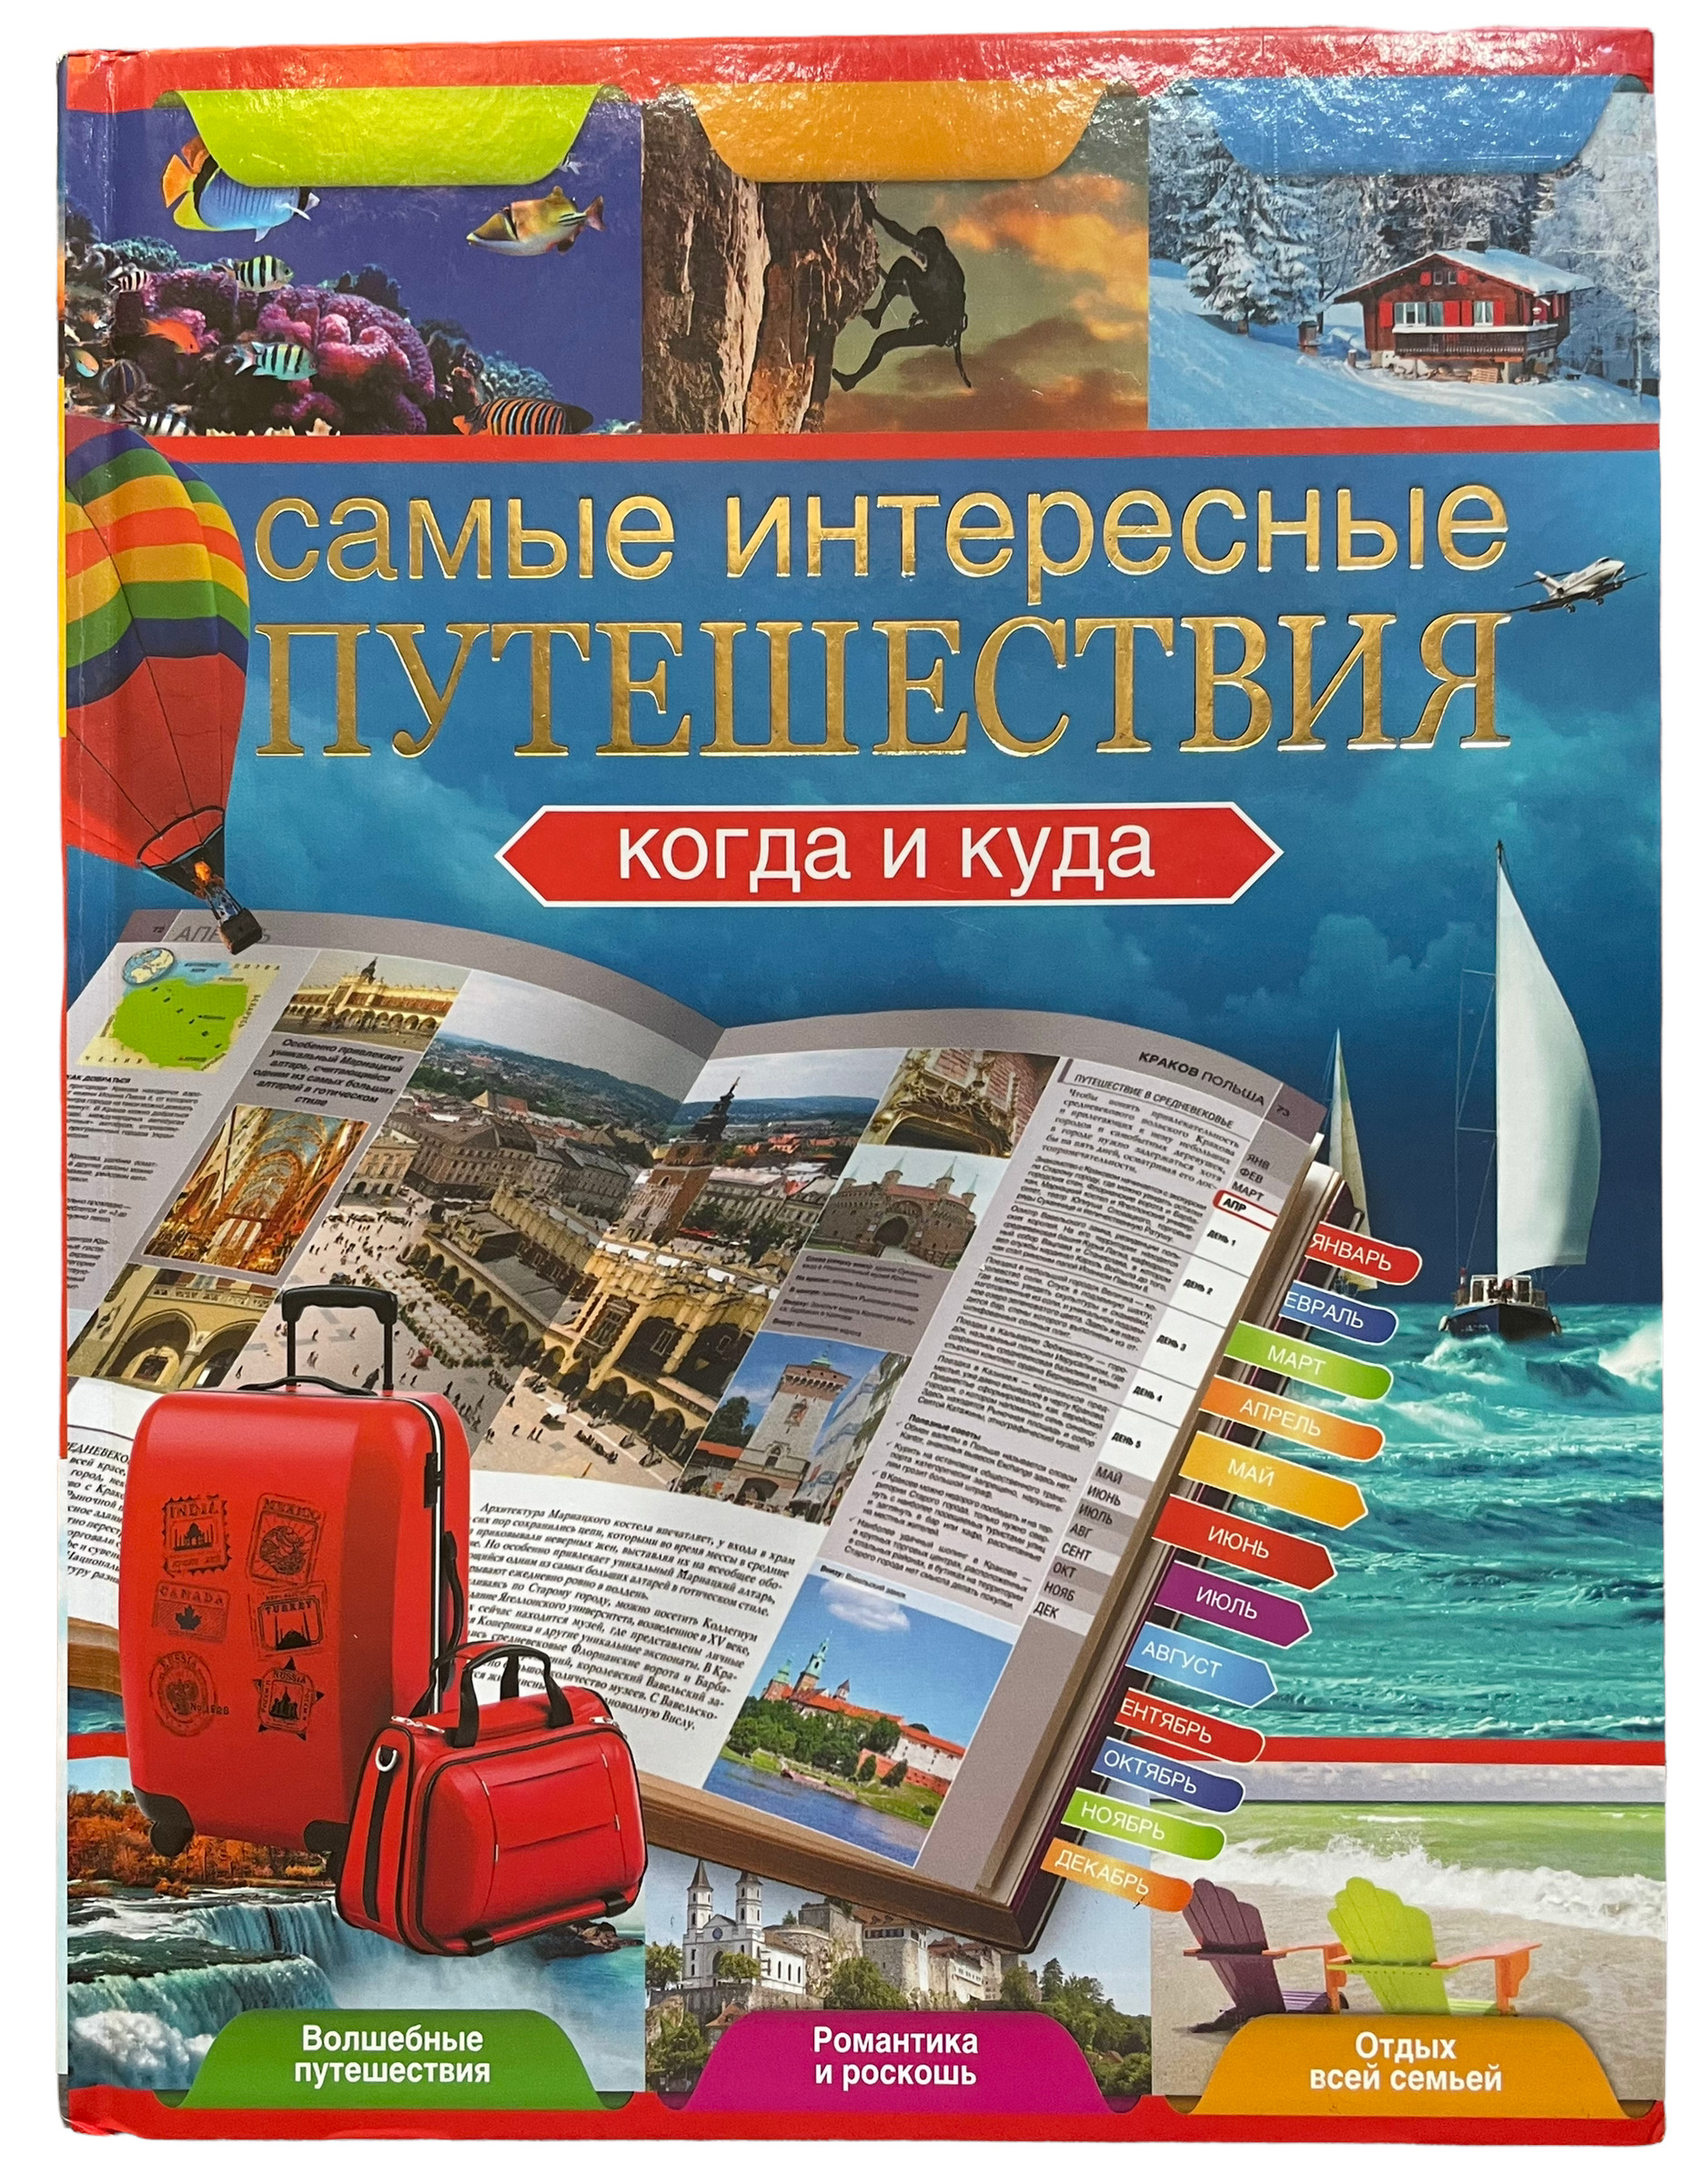 Литература путешествий это. Книга путешествия. Книжка про путешествия. Интересные книги про путешествия. Книги о путешествиях для детей.